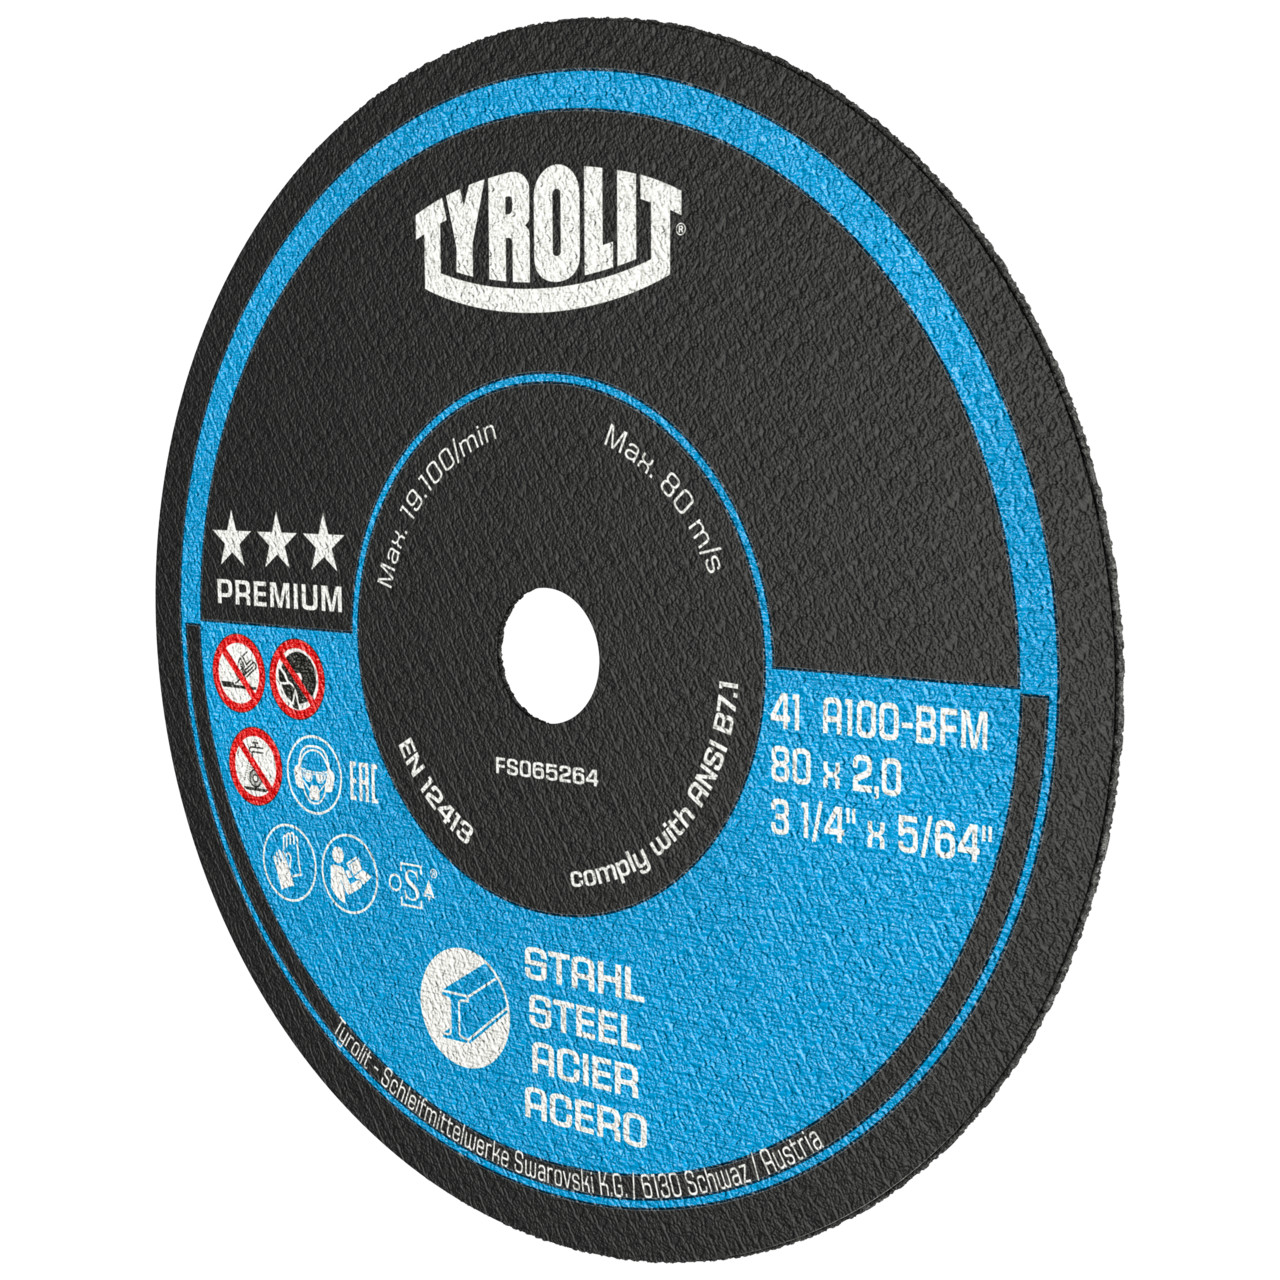 Tyrolit Discos de corte DxDxH 63x2x10 Para acero, forma: 41 - versión recta, Art. 704198